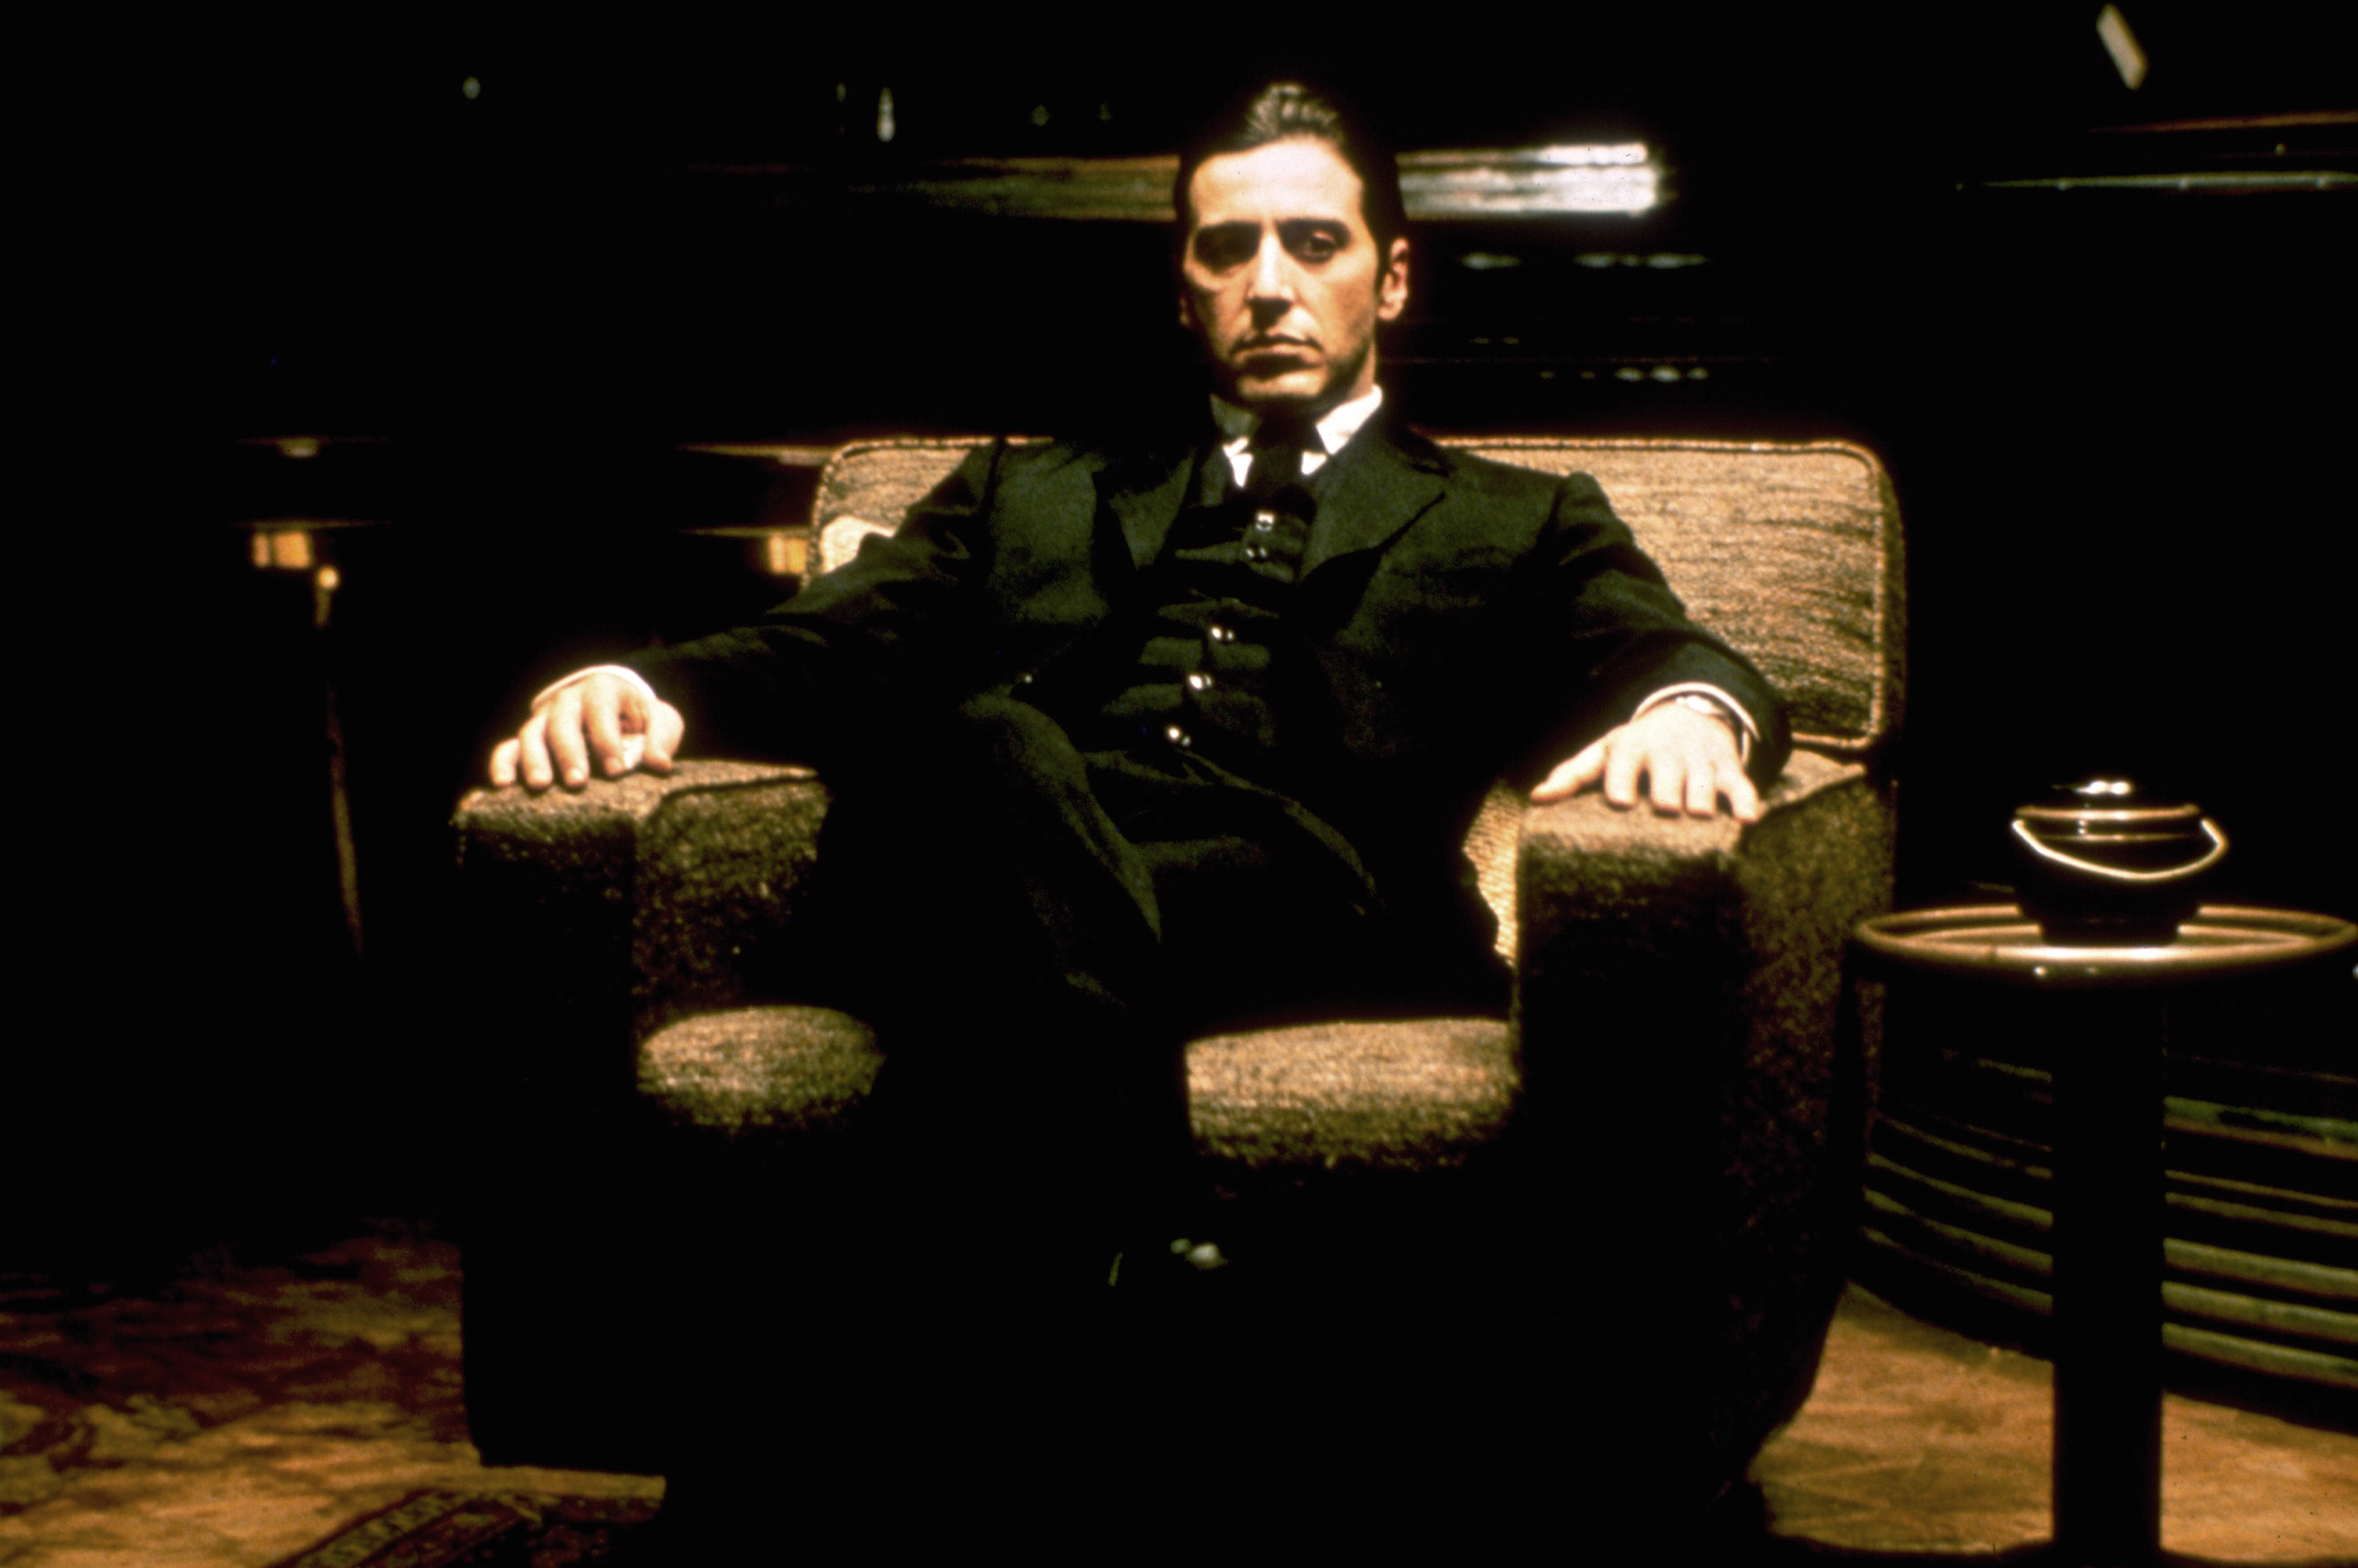 al-pacino-godfather-michael-corleone.jpg